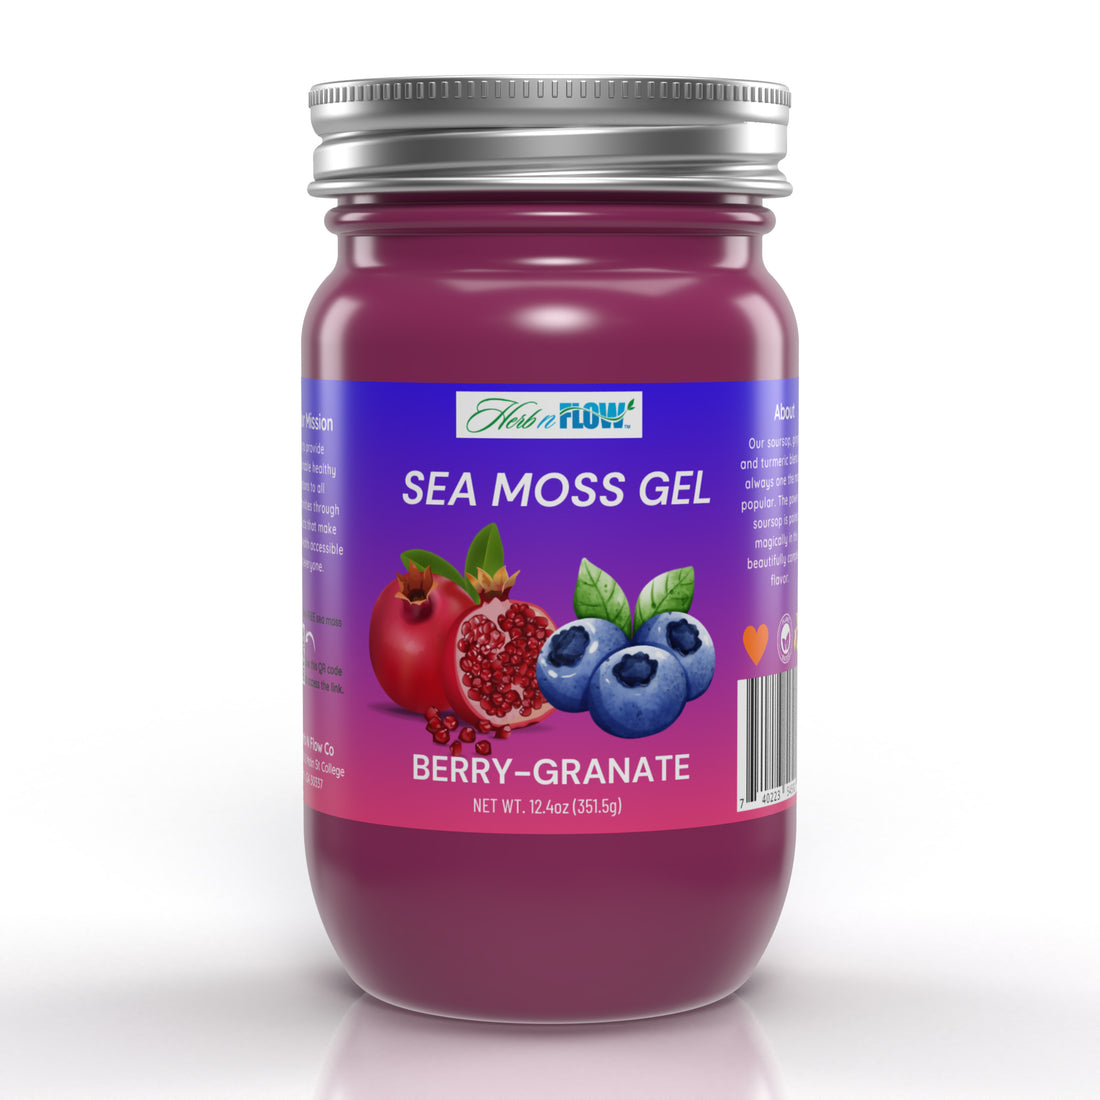 Berry-Granate Sea Moss Gel